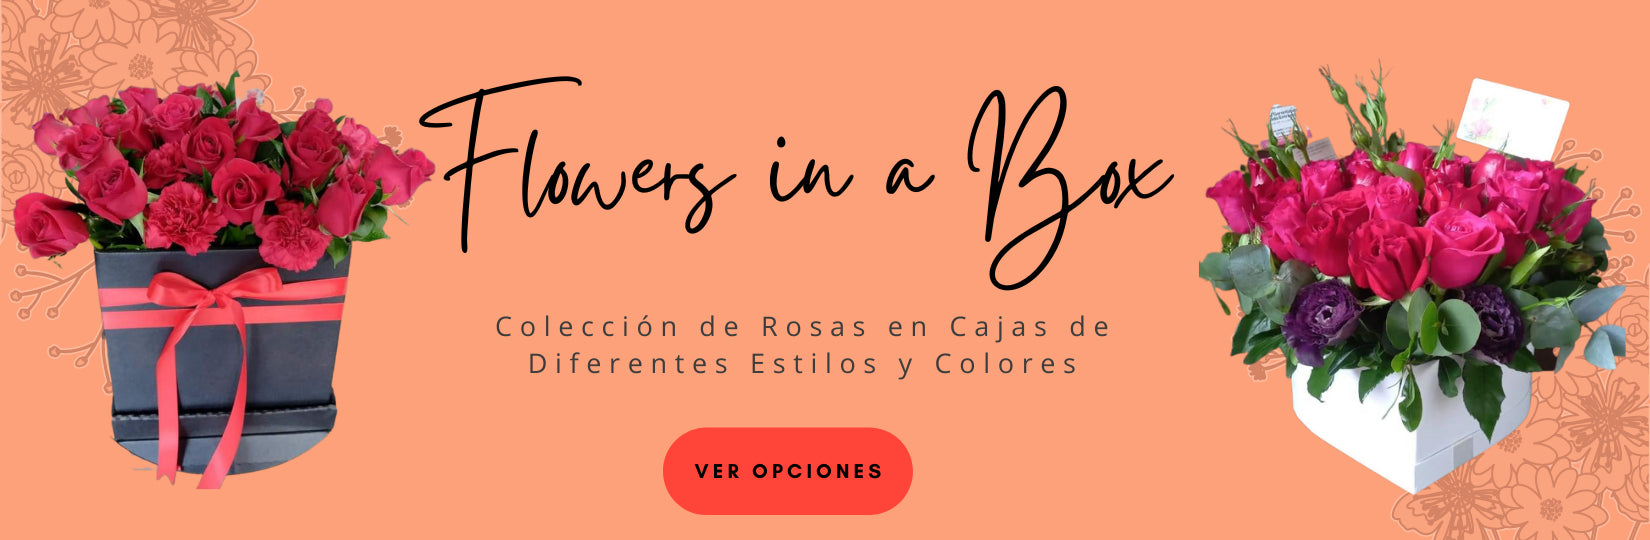 Ramo Buchón, Flower bouquets  Bouquet de rosas rojas, Ramos, Flores